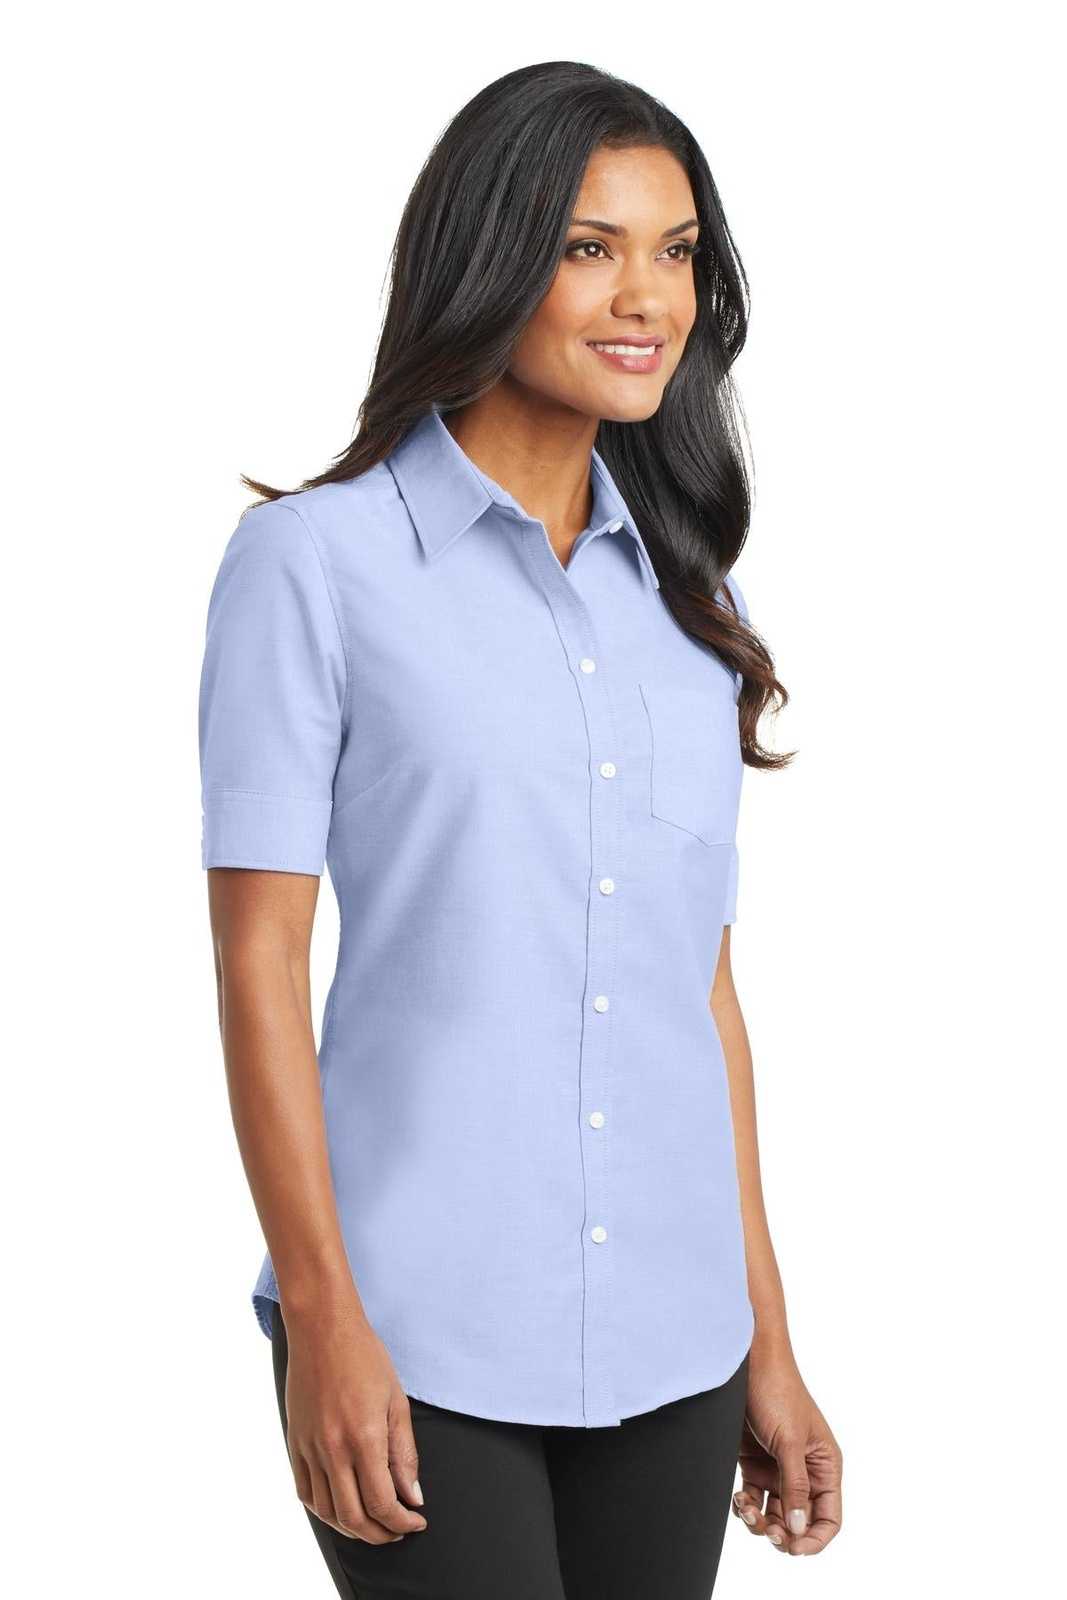 Port Authority L659 Ladies Short Sleeve Superpro Oxford Shirt - Oxford Blue - HIT a Double - 4